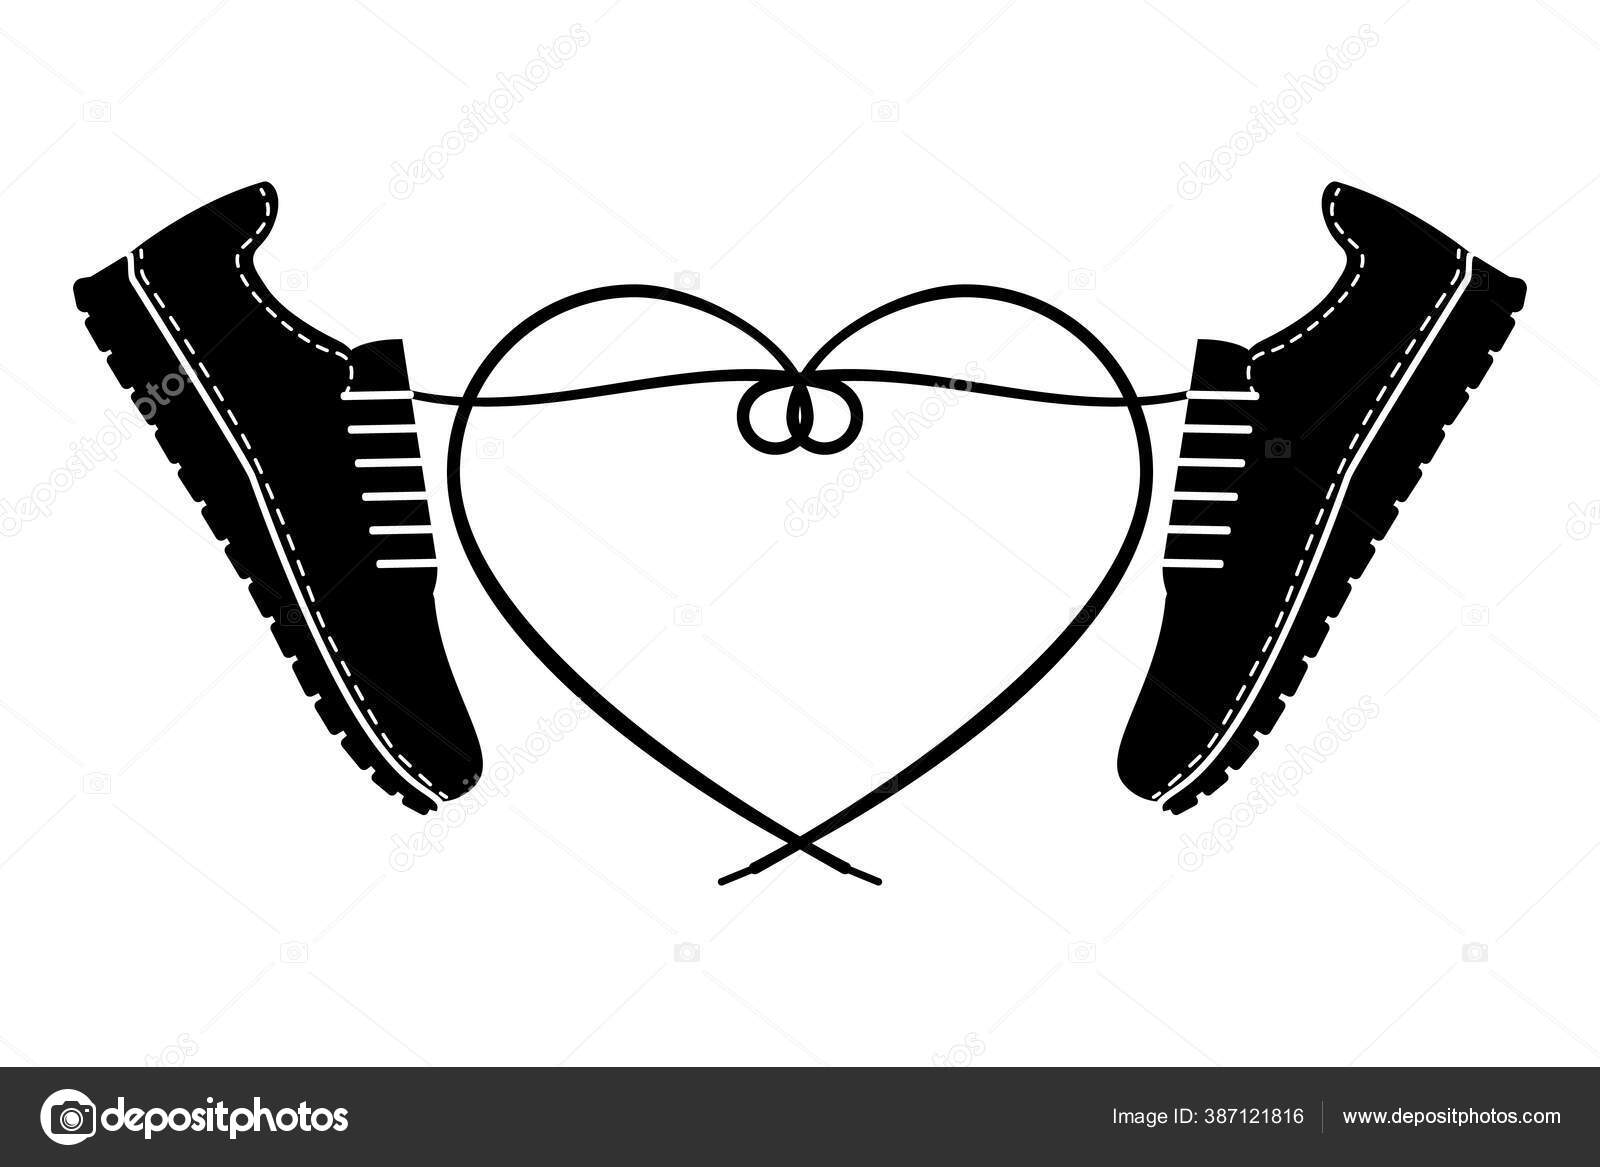 heart shoelaces